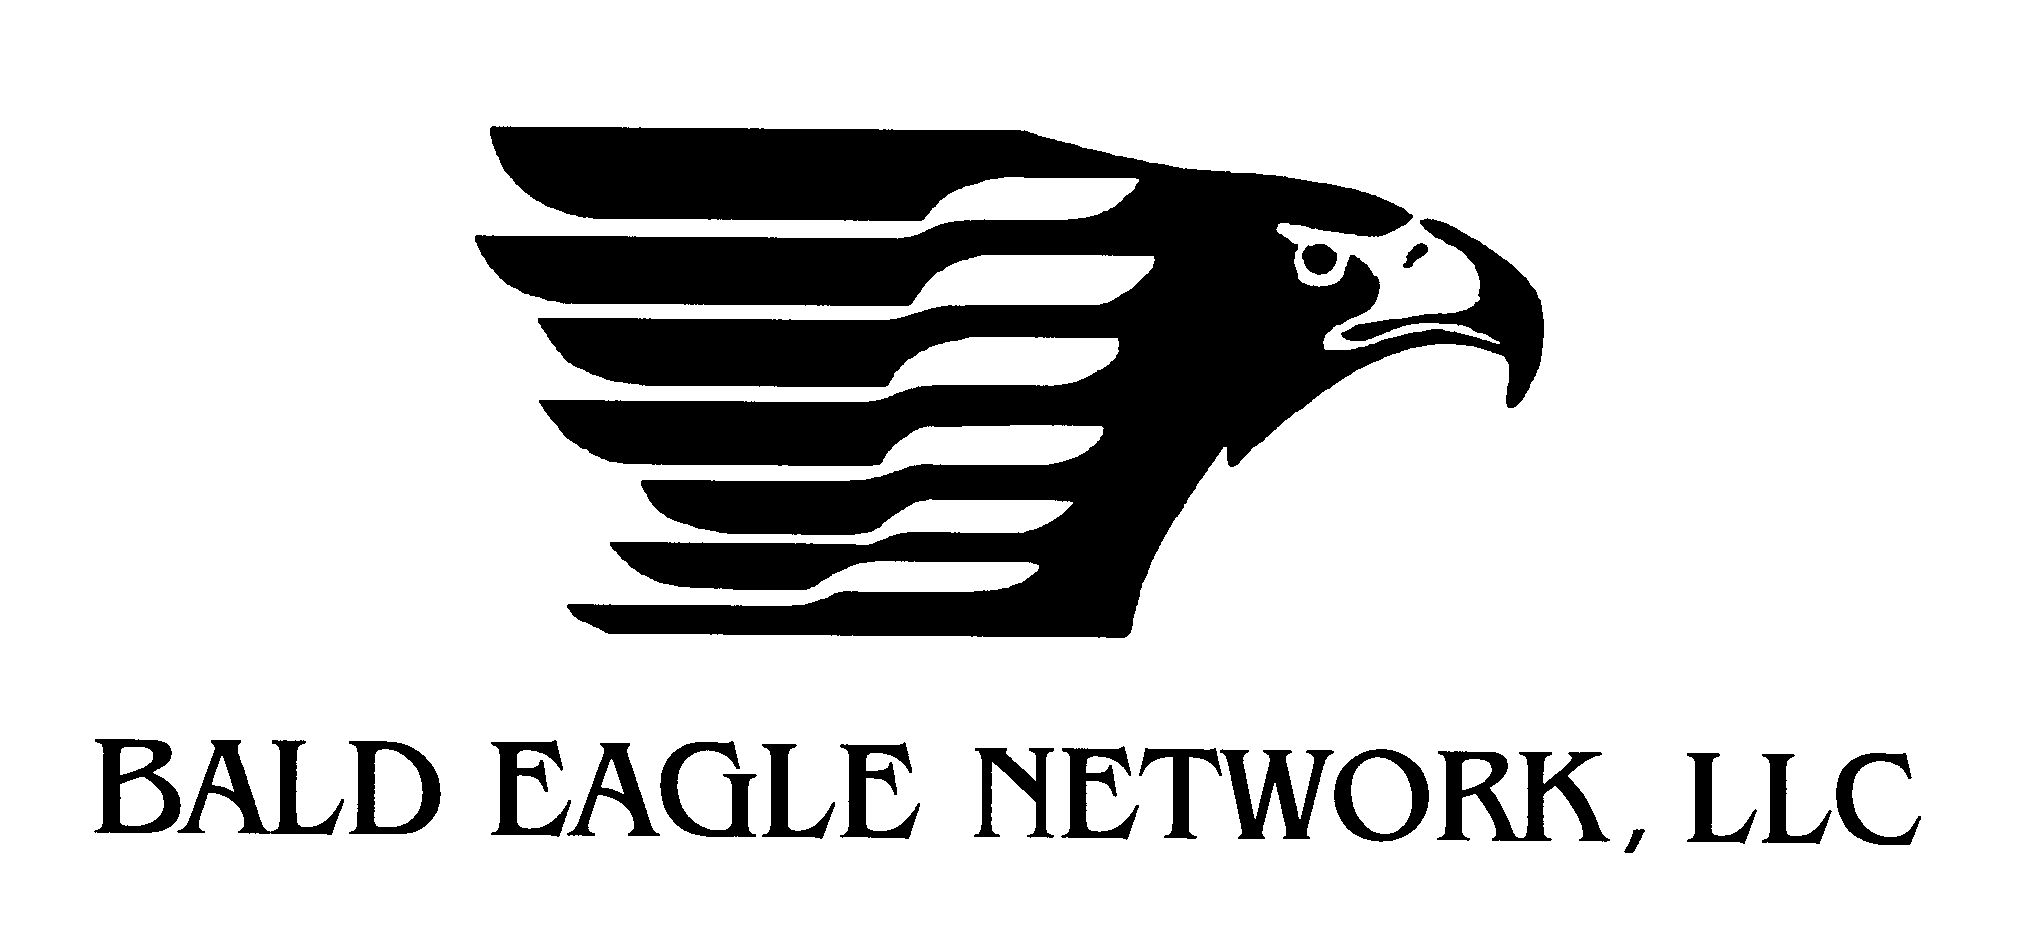  BALD EAGLE NETWORK, LLC